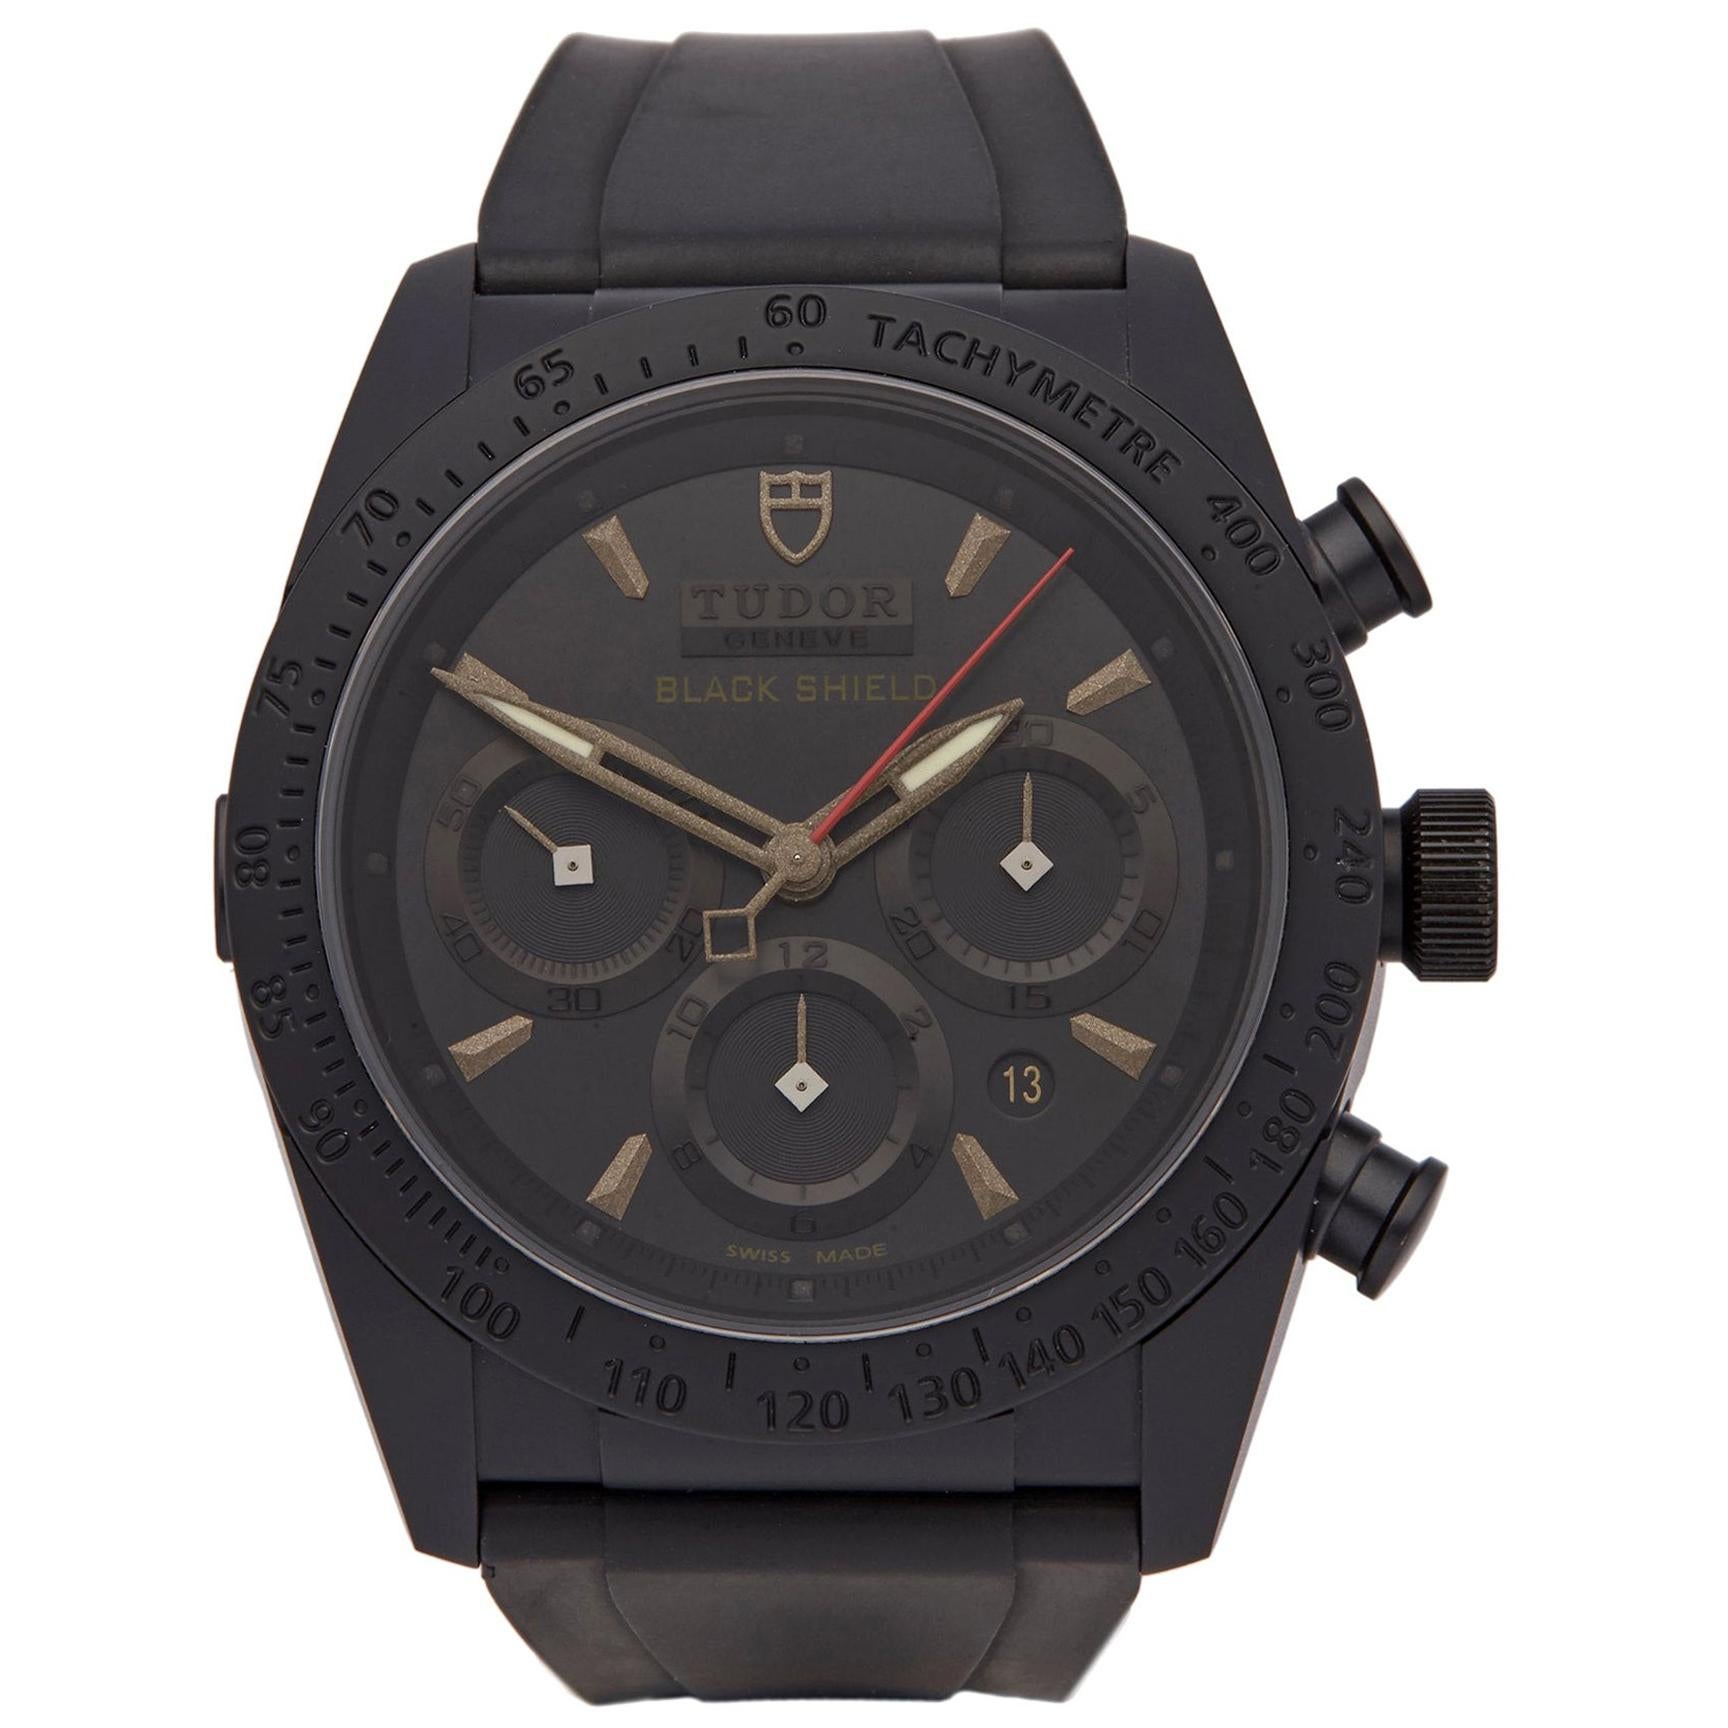 Tudor Blackshield 42000CN Men's DLC Coated Stainless Steel Chronograph Watch